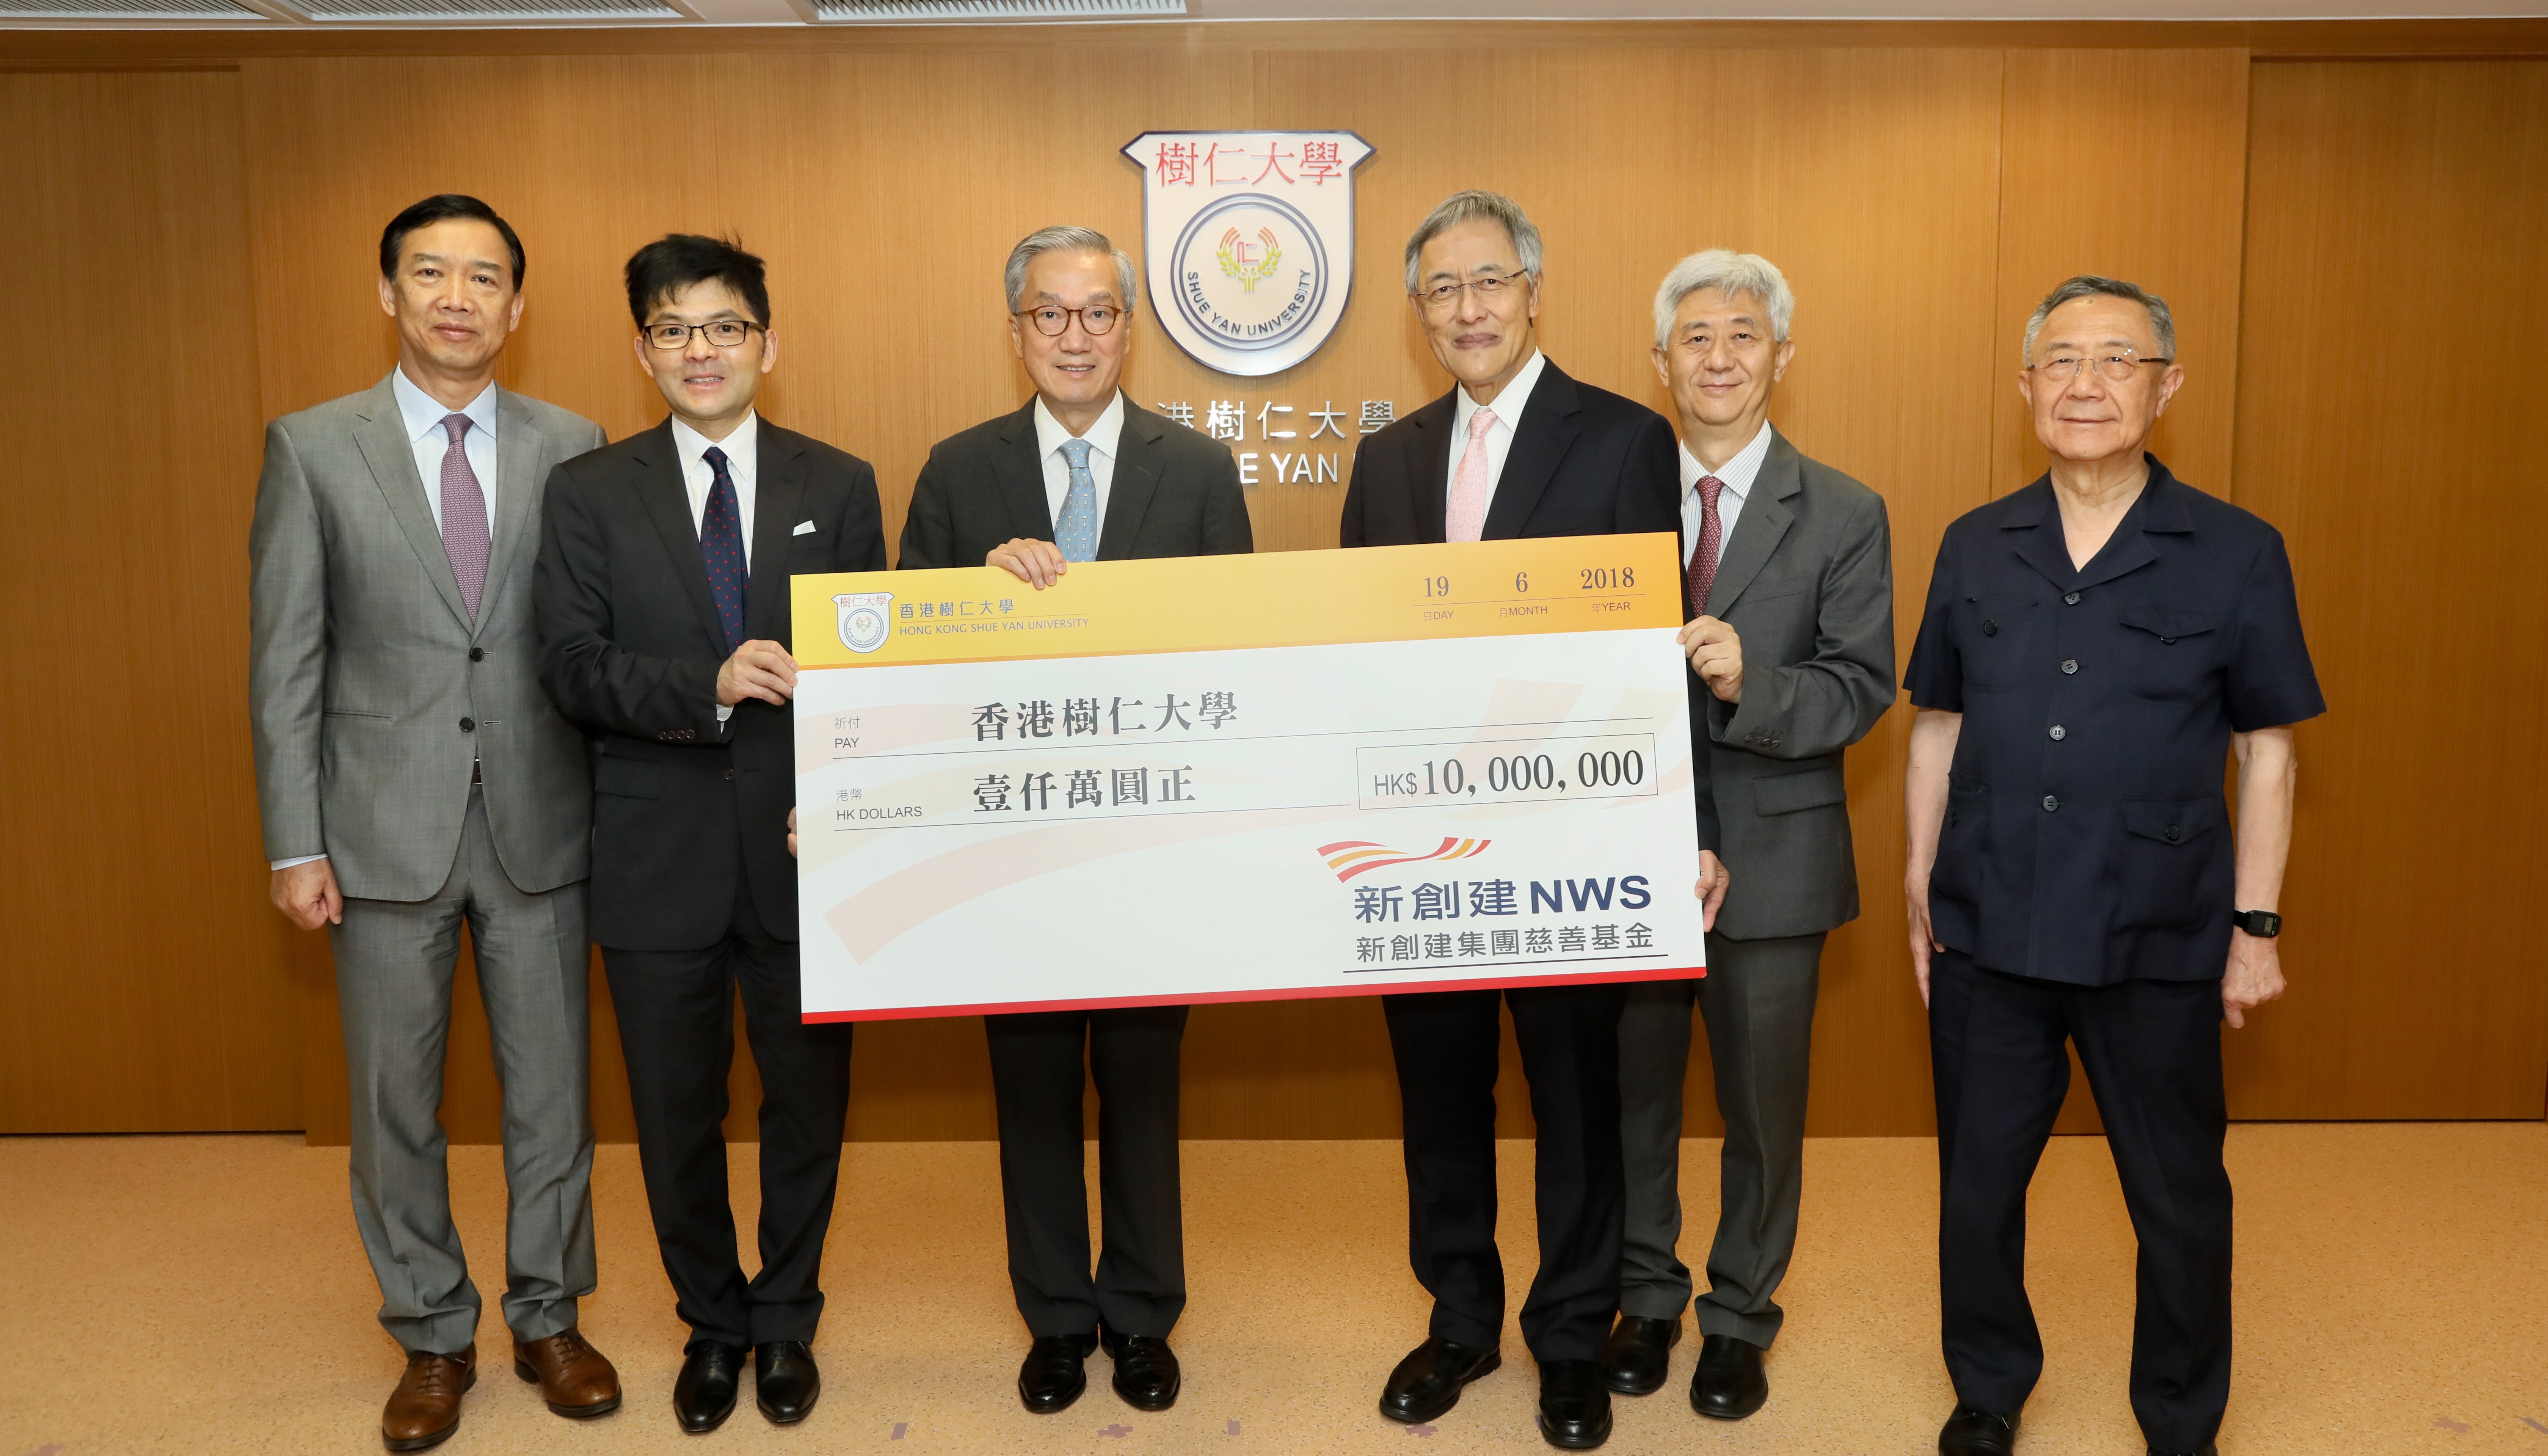 NWS Holdings Charities Foundation donates HK$10 million to Hong Kong Shue Yan University to fund major renovation project